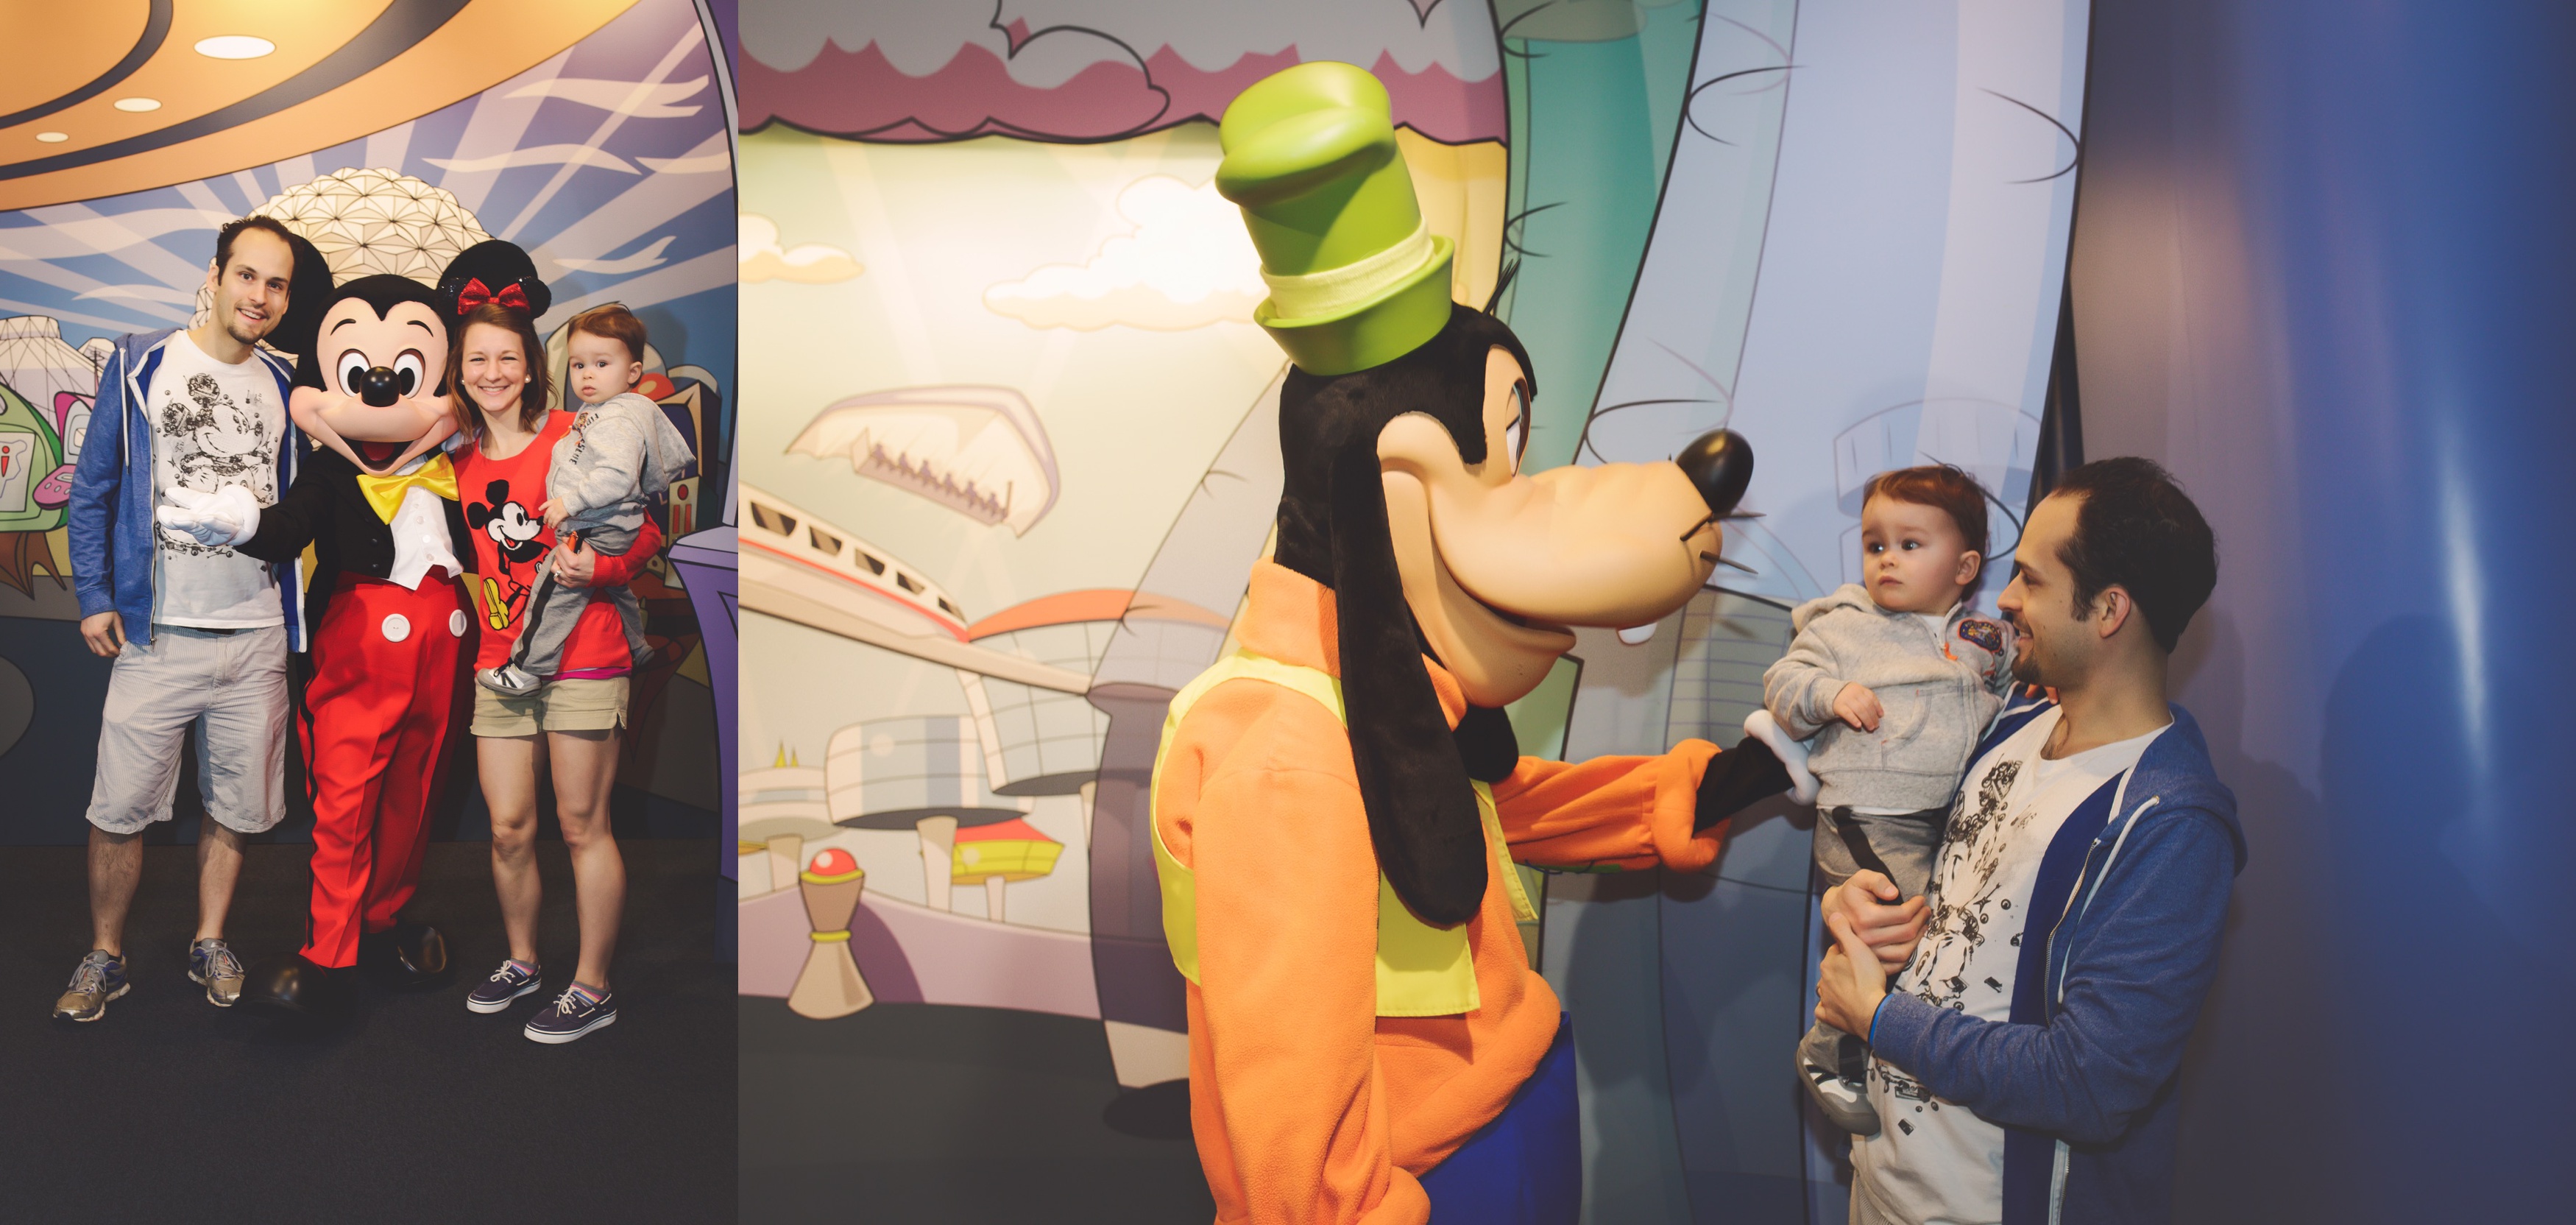 Walt Disney World Character Meet-and-Greets, Meeting Characters, First Time Character Meeting, Magic Kingdom, Epcot